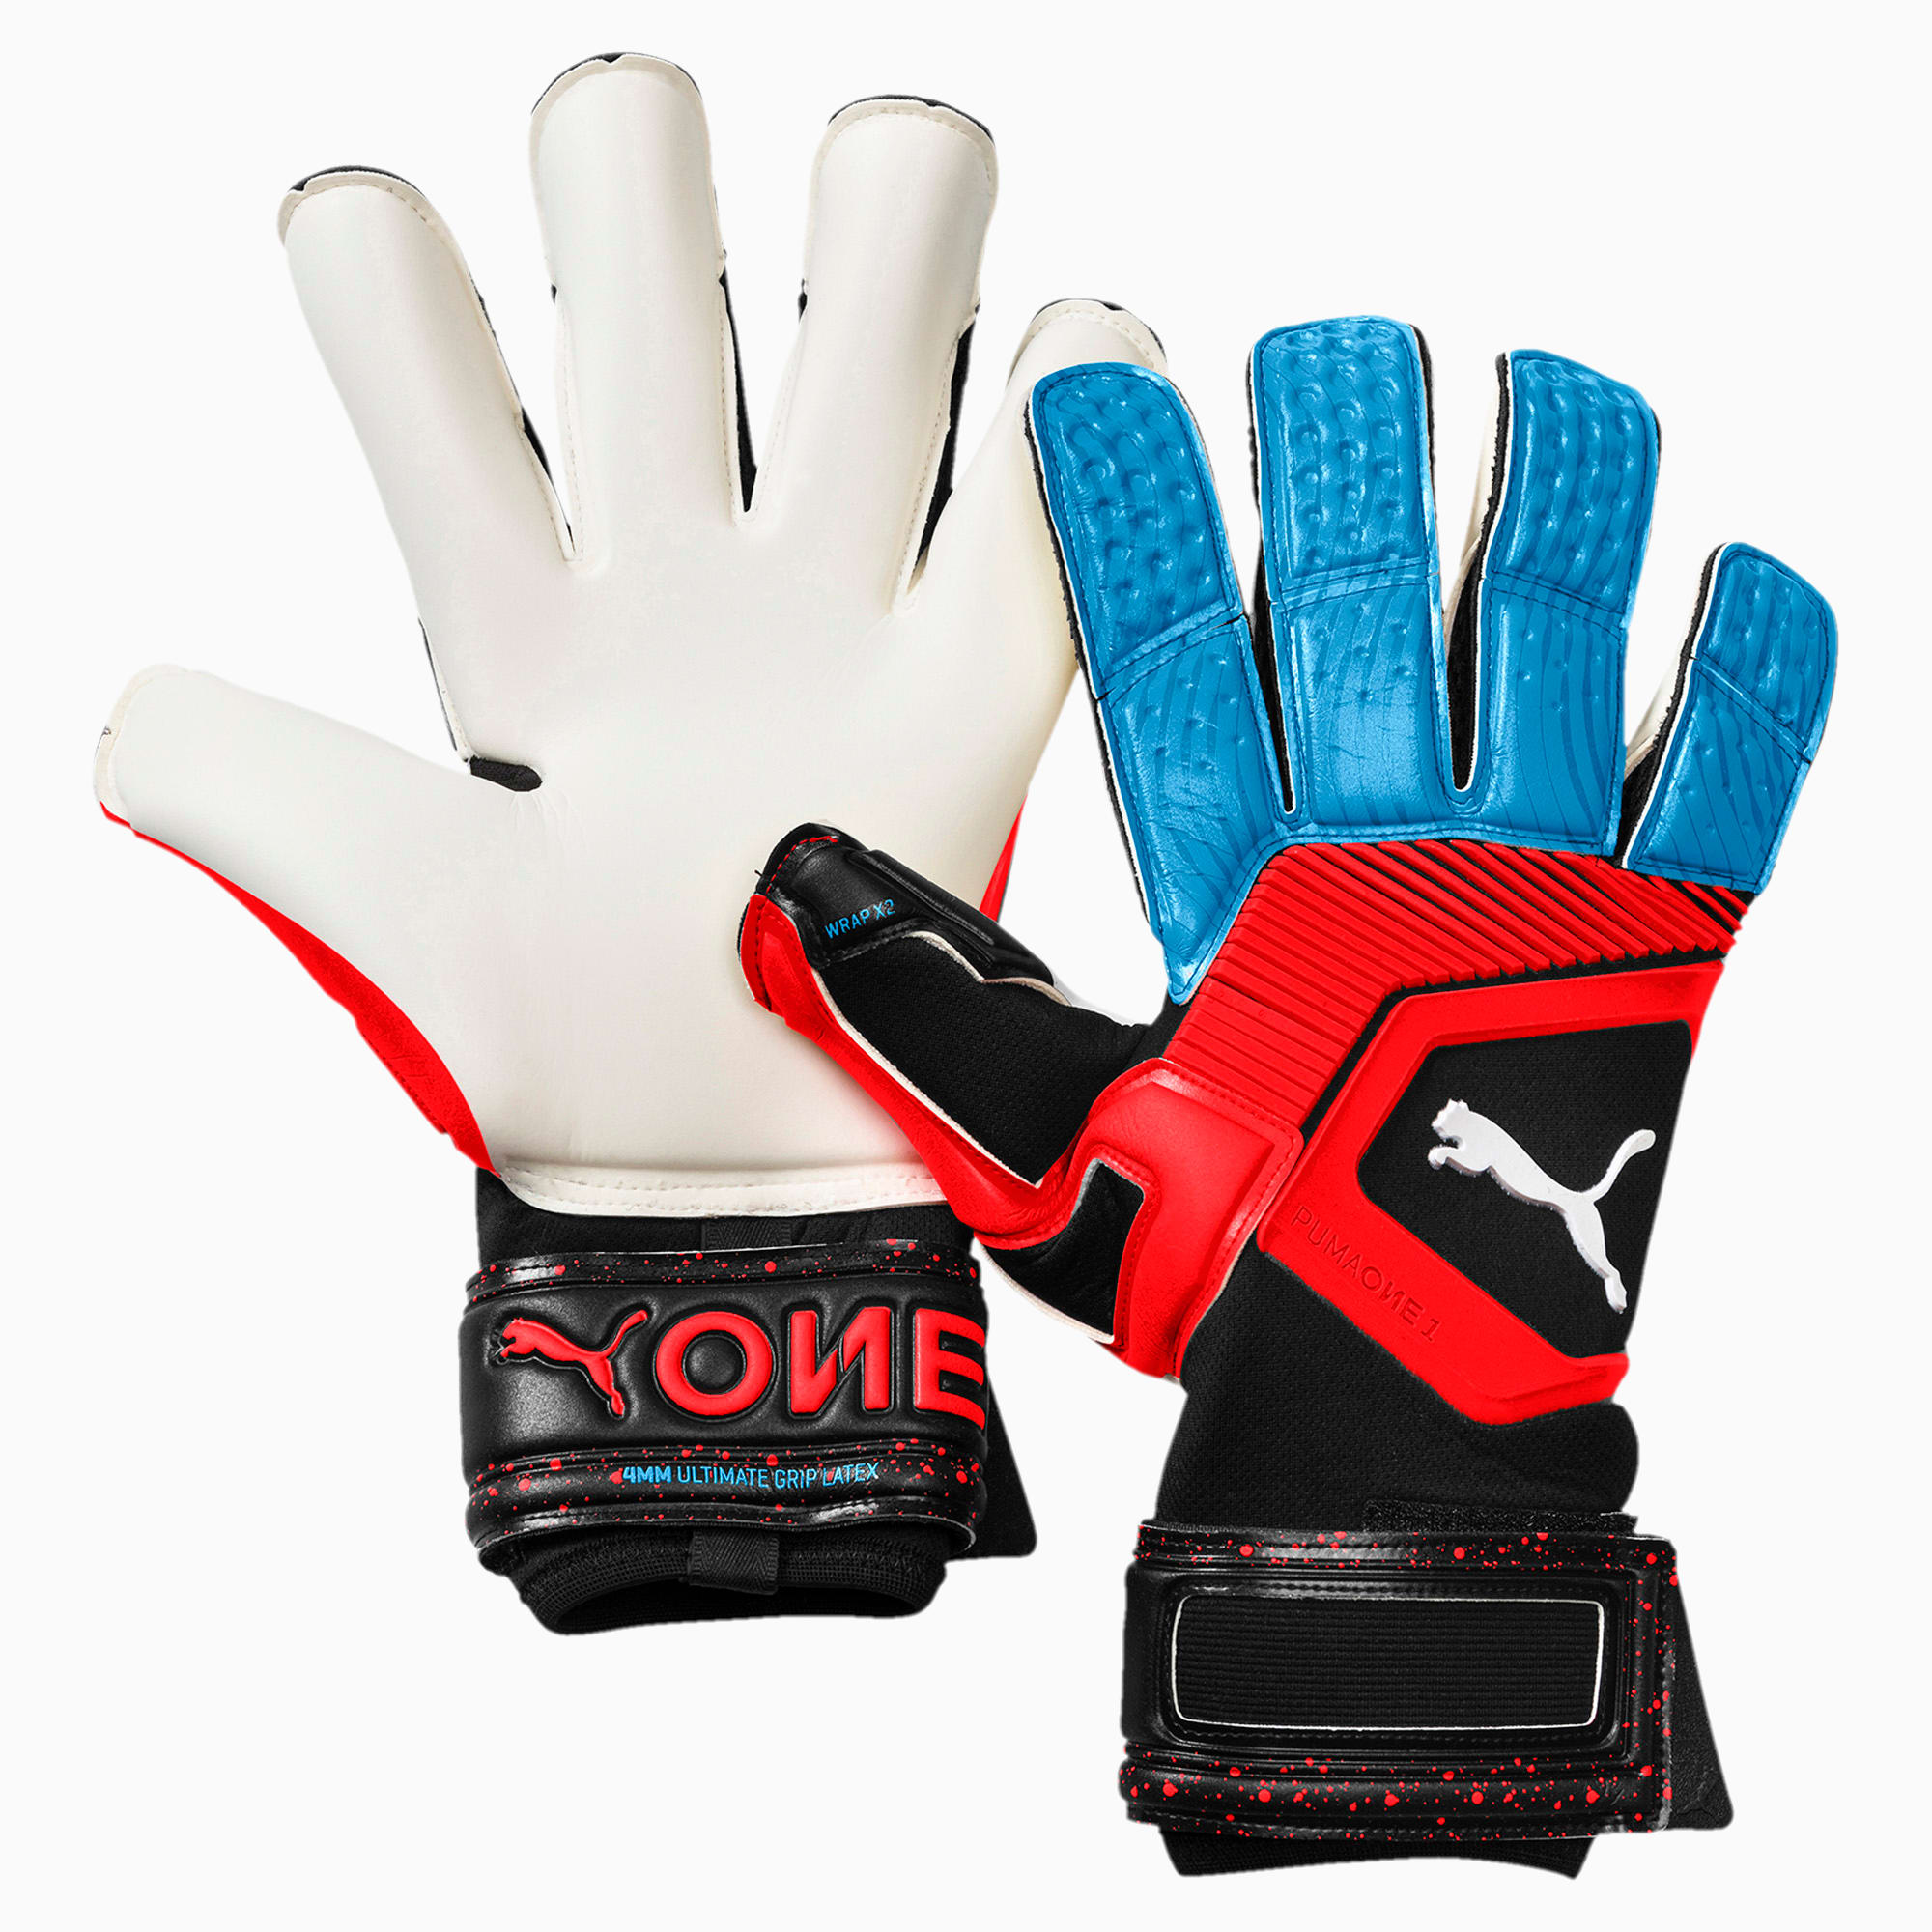 PUMA ONE Grip 1 Hybrid Pro Goalkeeper Gloves